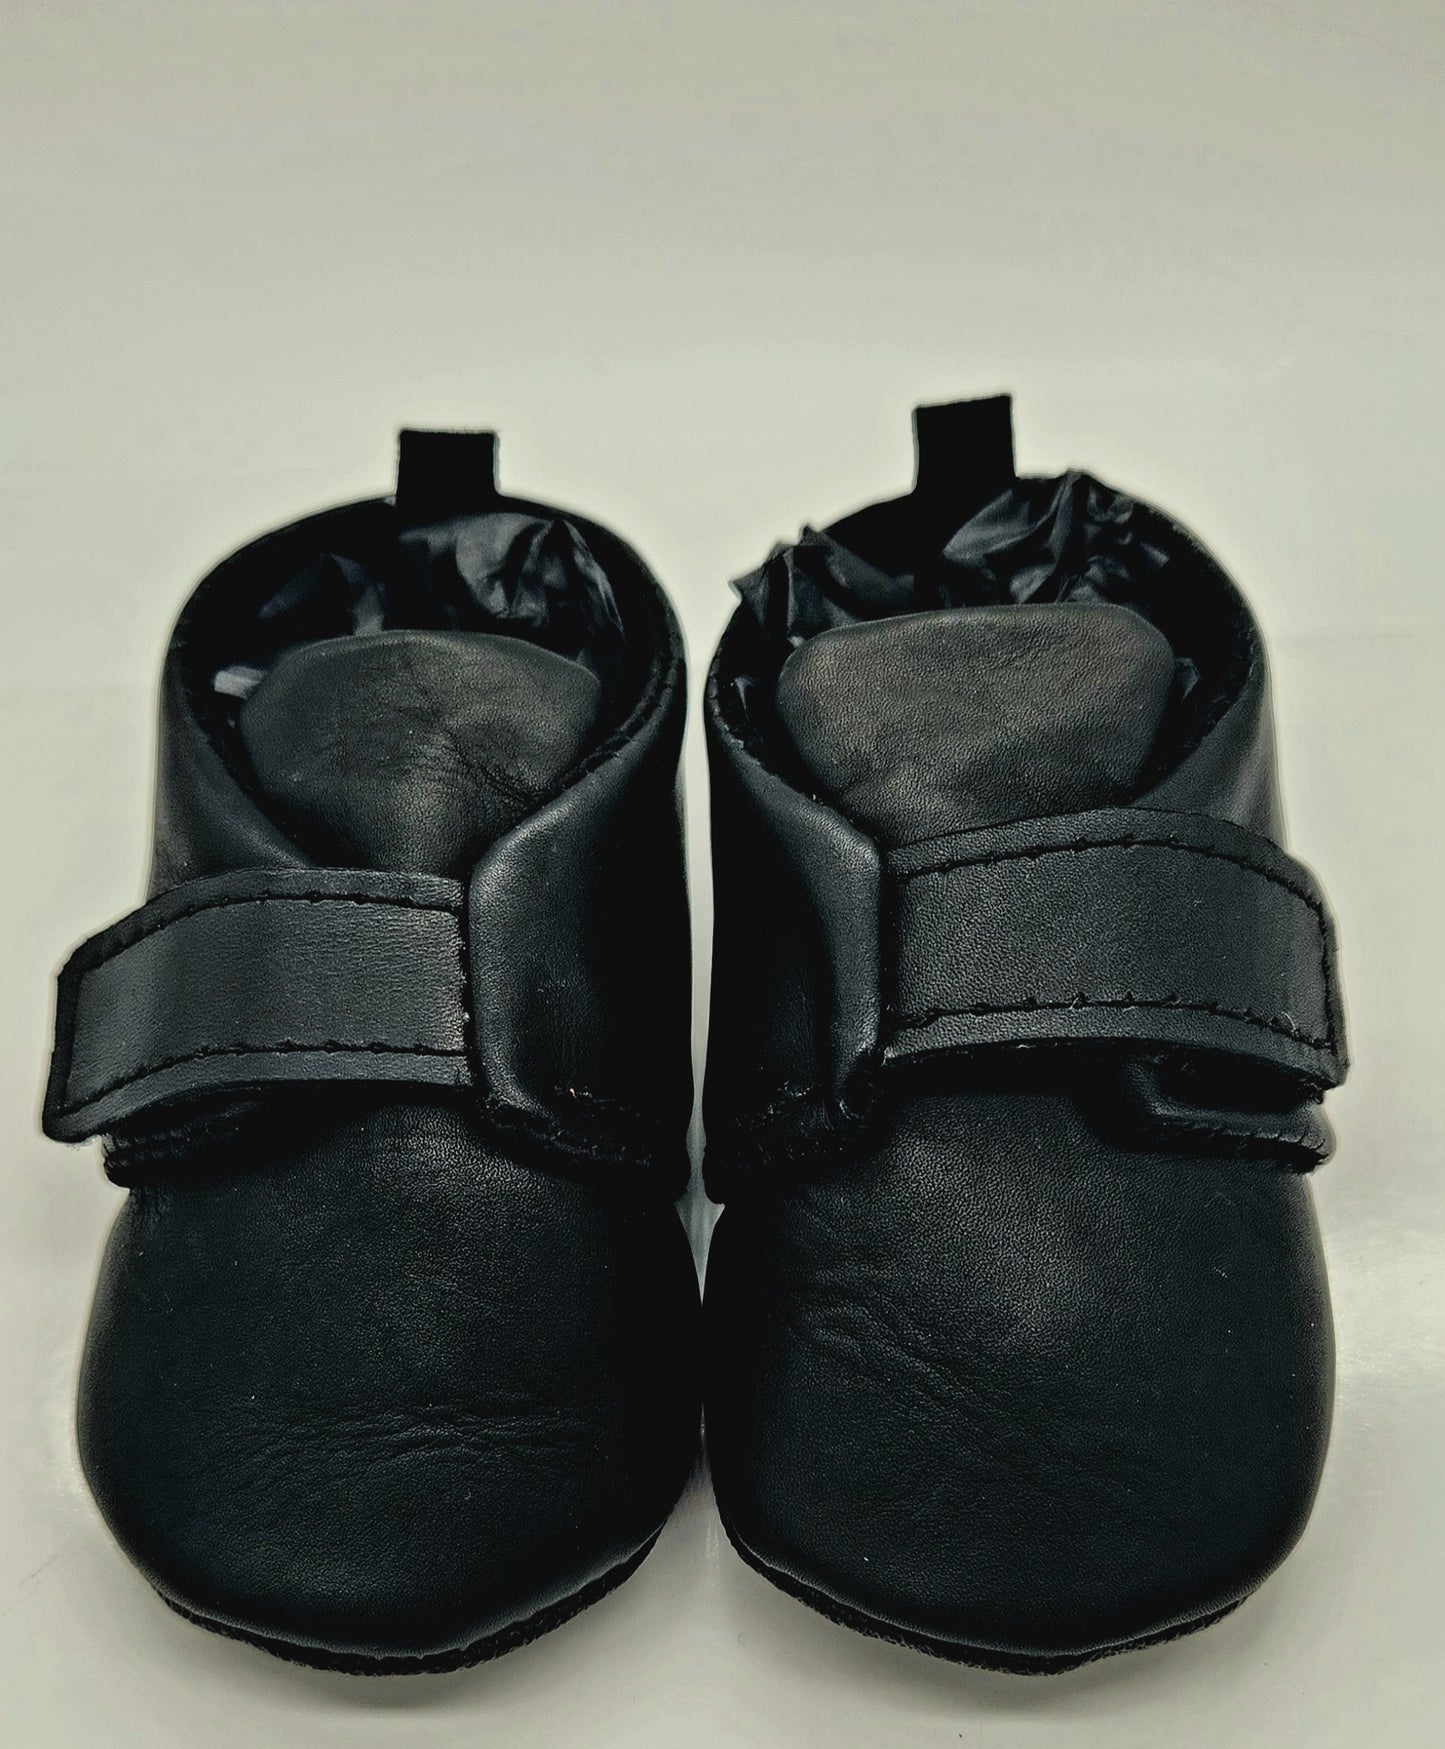 Black leather - Size 4 US